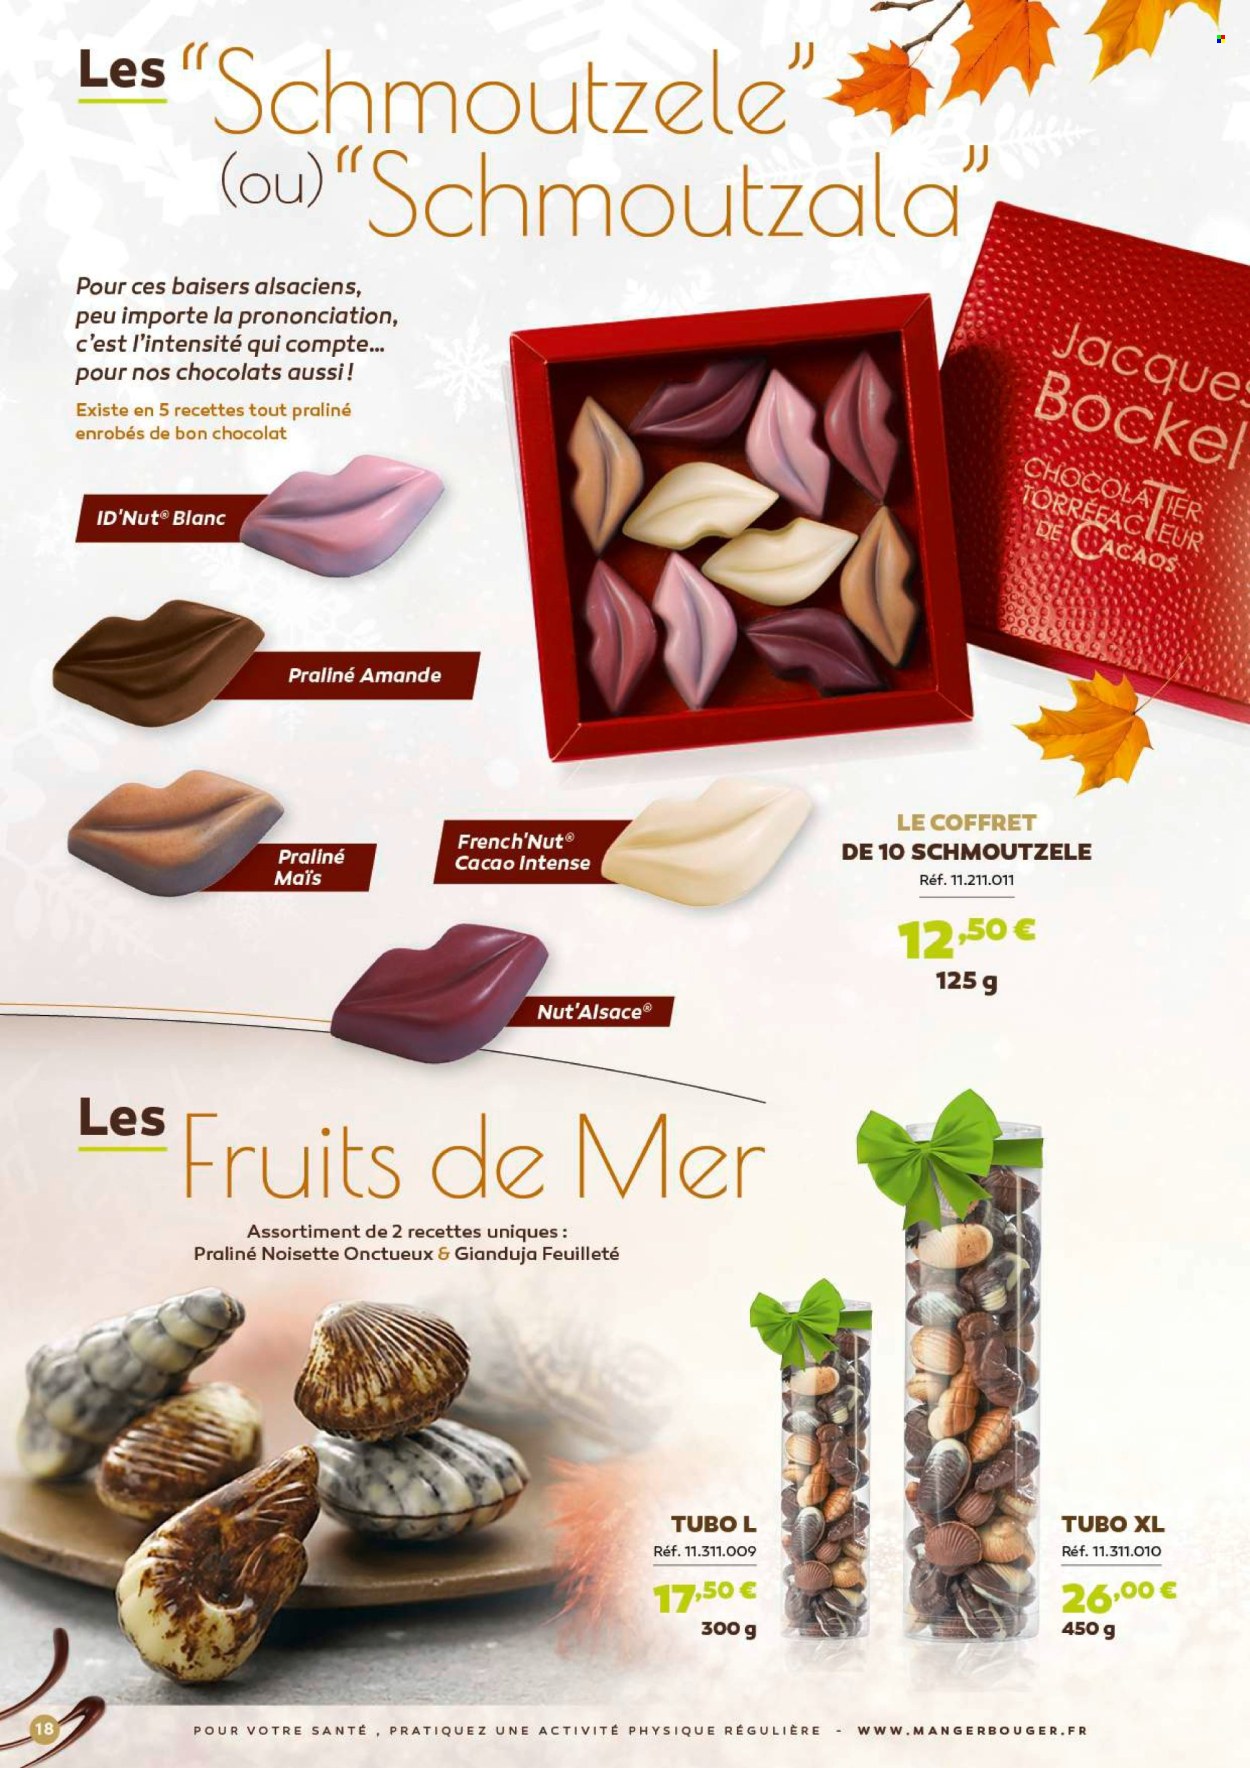 thumbnail - Catalogue Jacques Bockel - Produits soldés - chocolat, pralinés. Page 18.